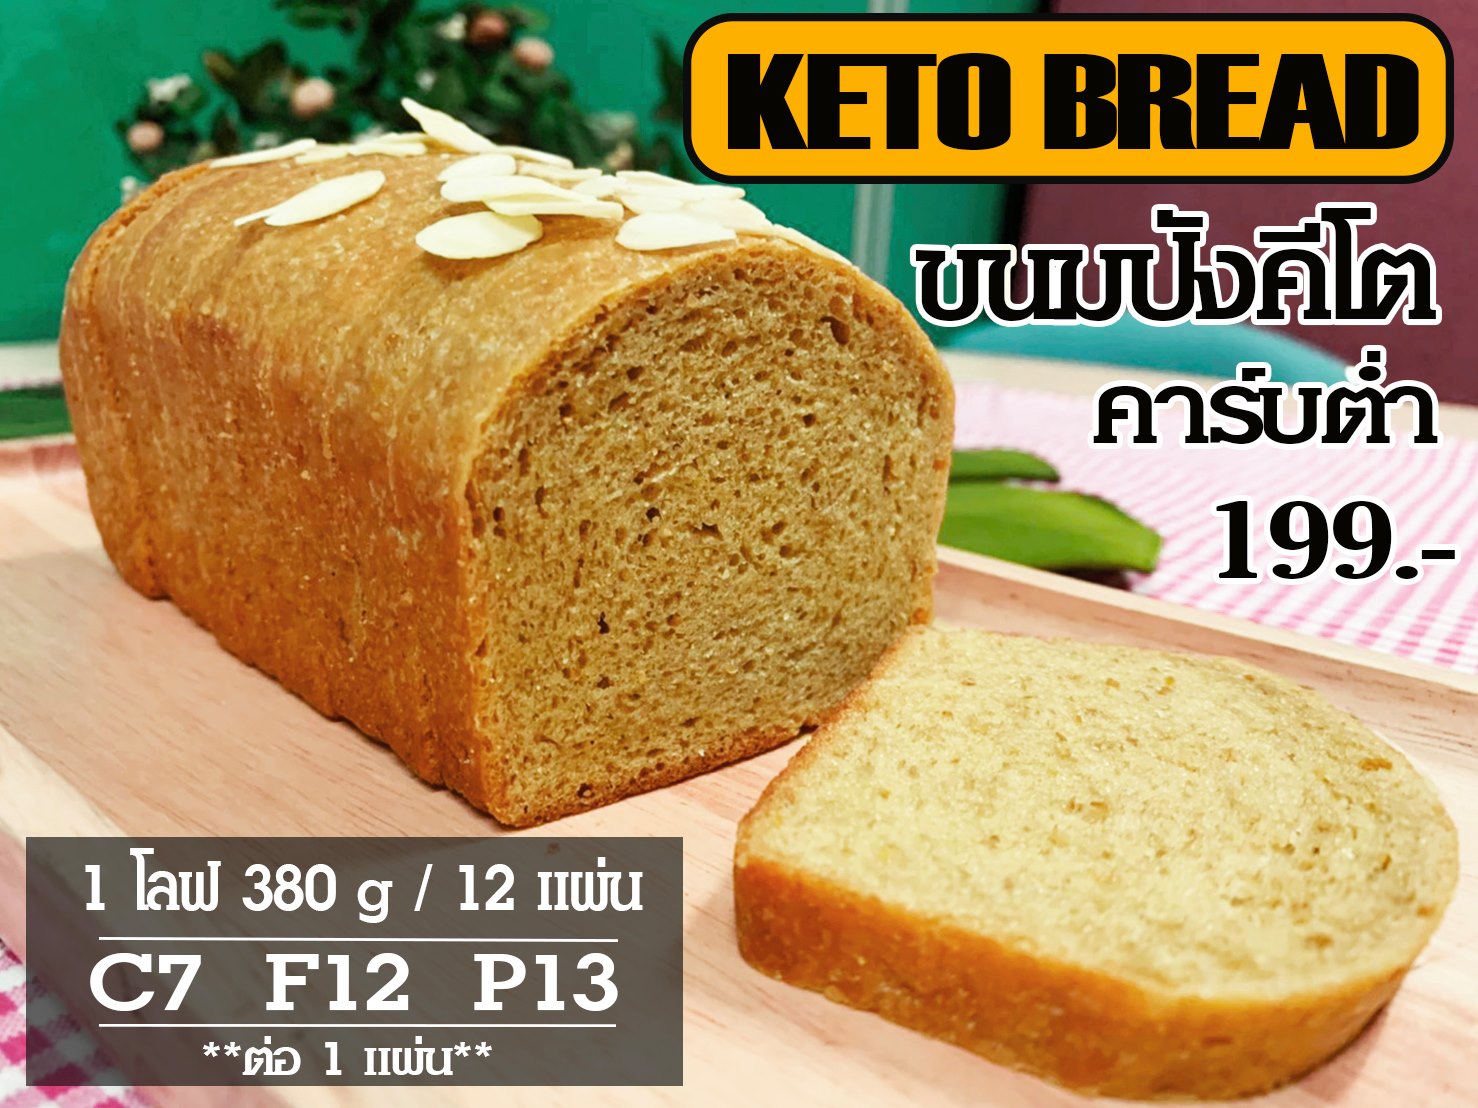 KETO BREAD ขนมปังคีโต คาร์บต่ำ